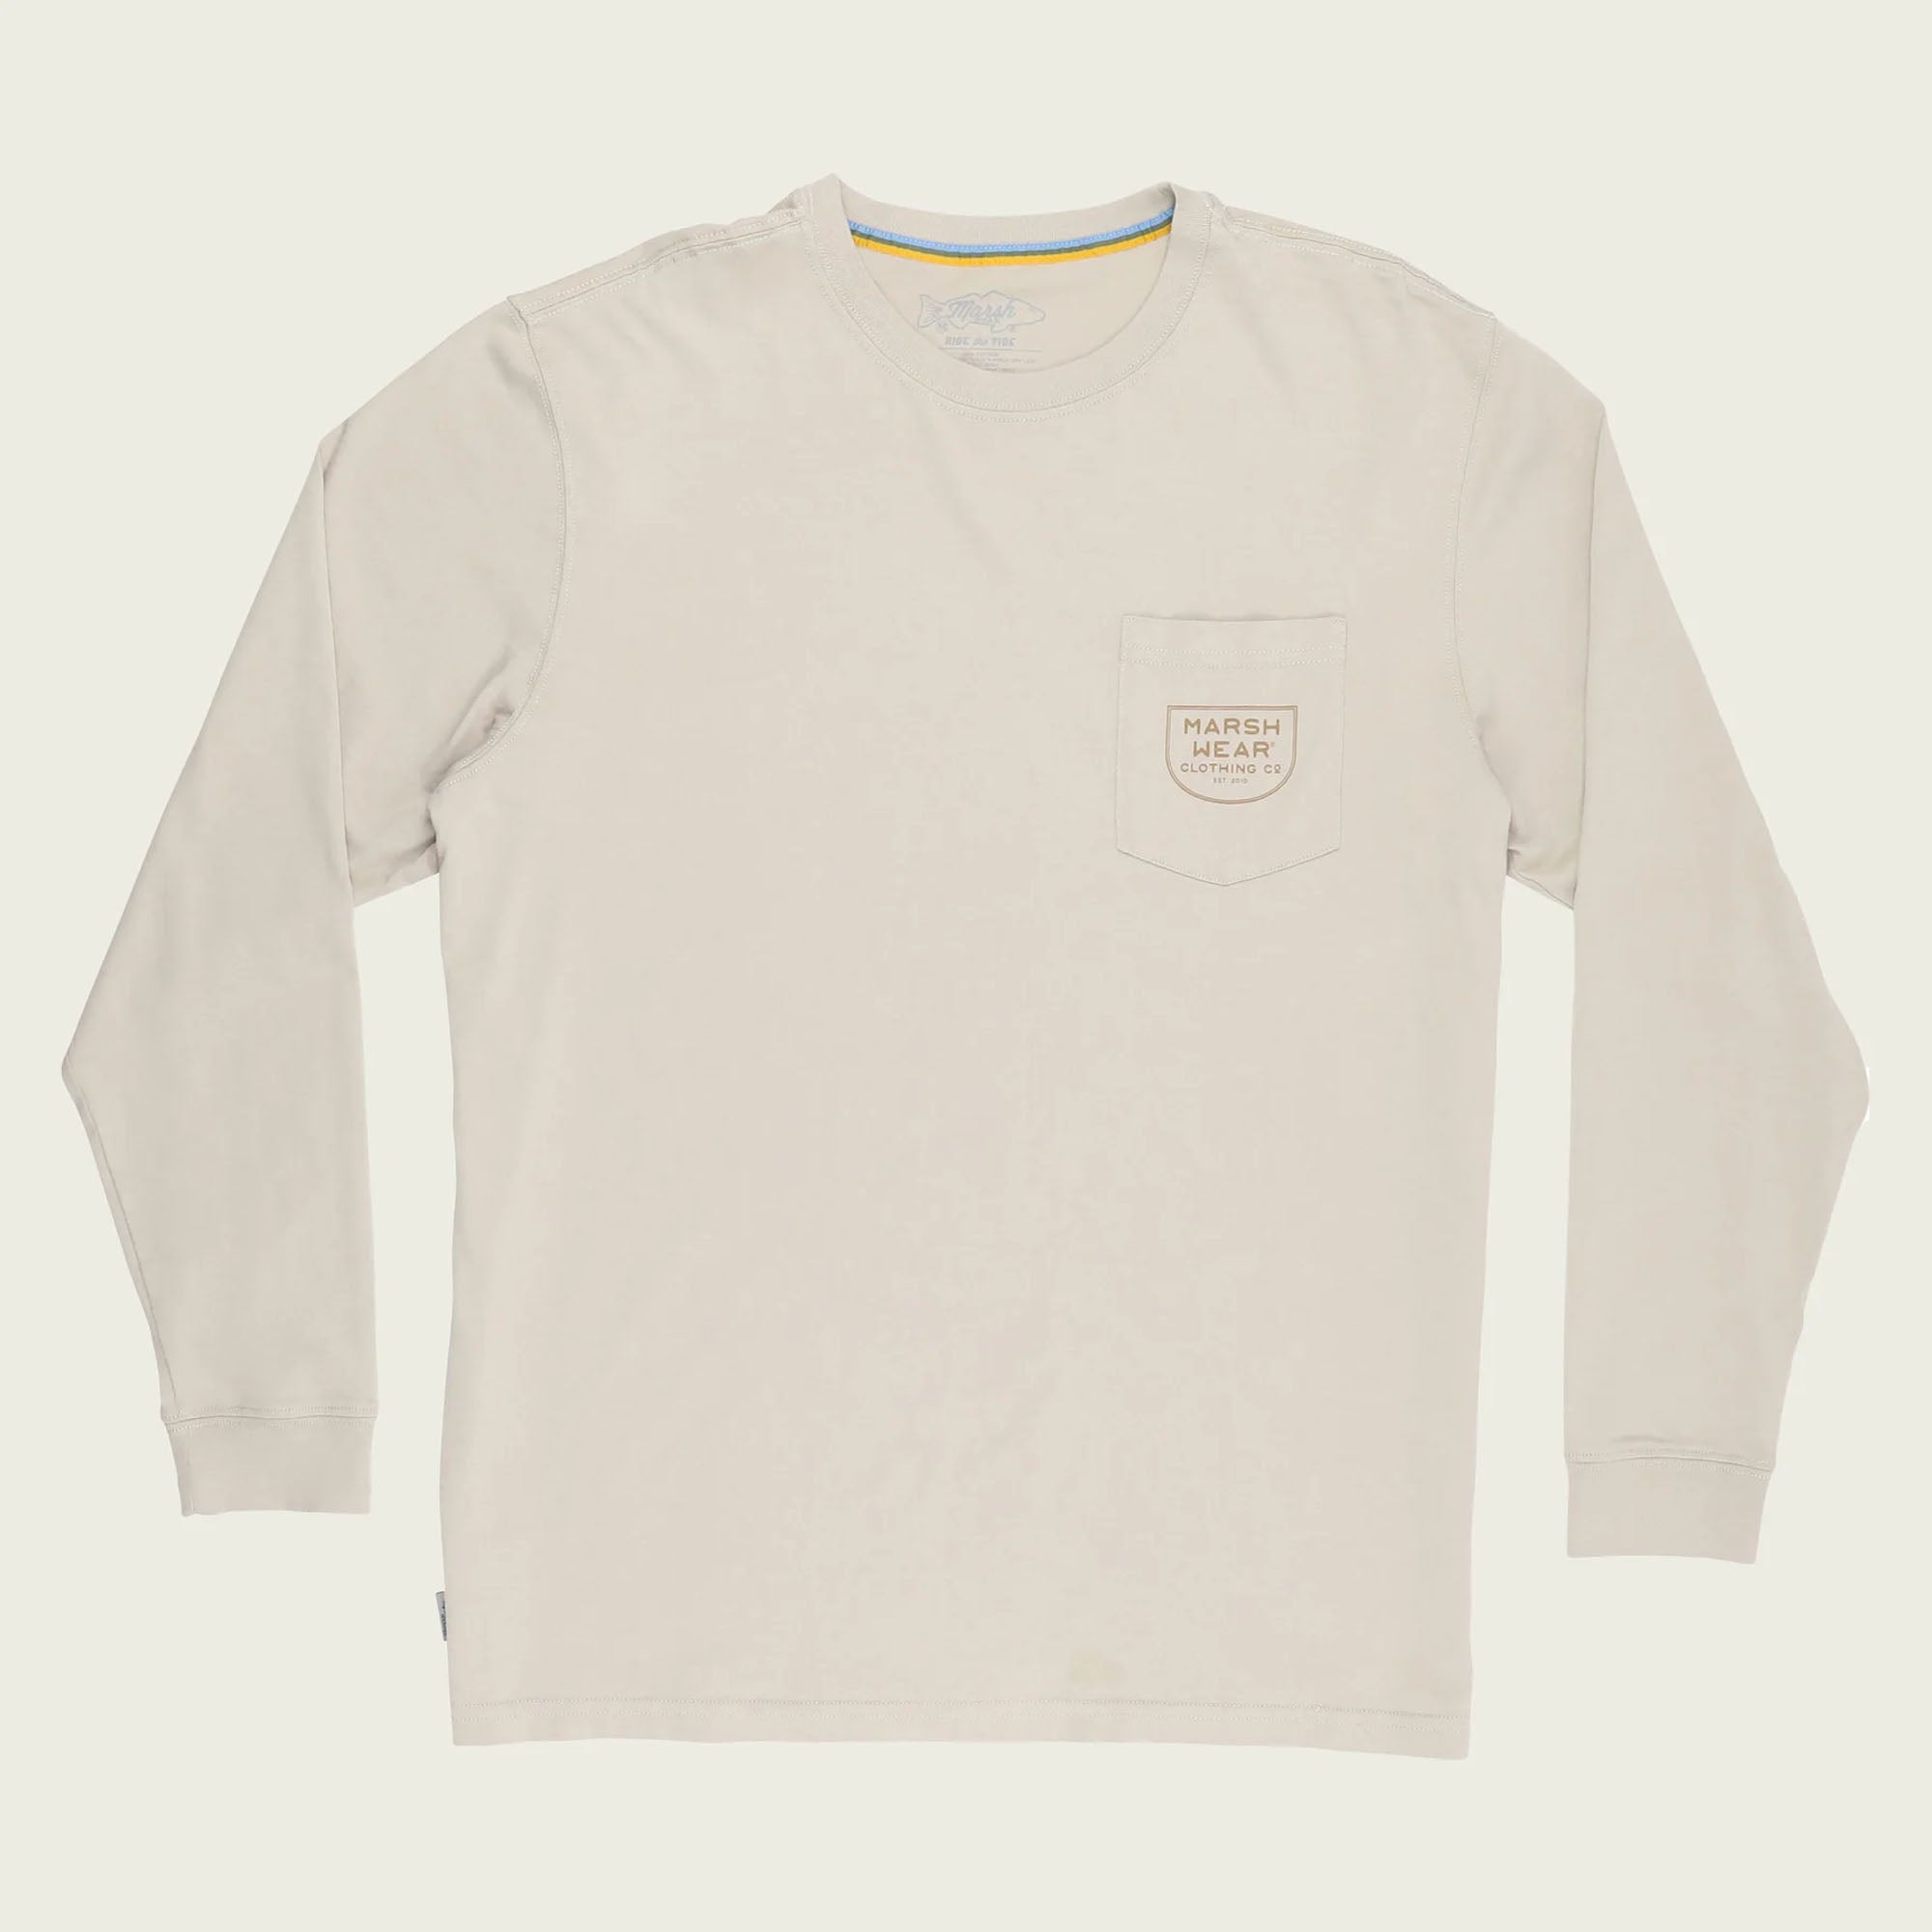 Marsh Wear Retriever Men's L/S T-Shirt